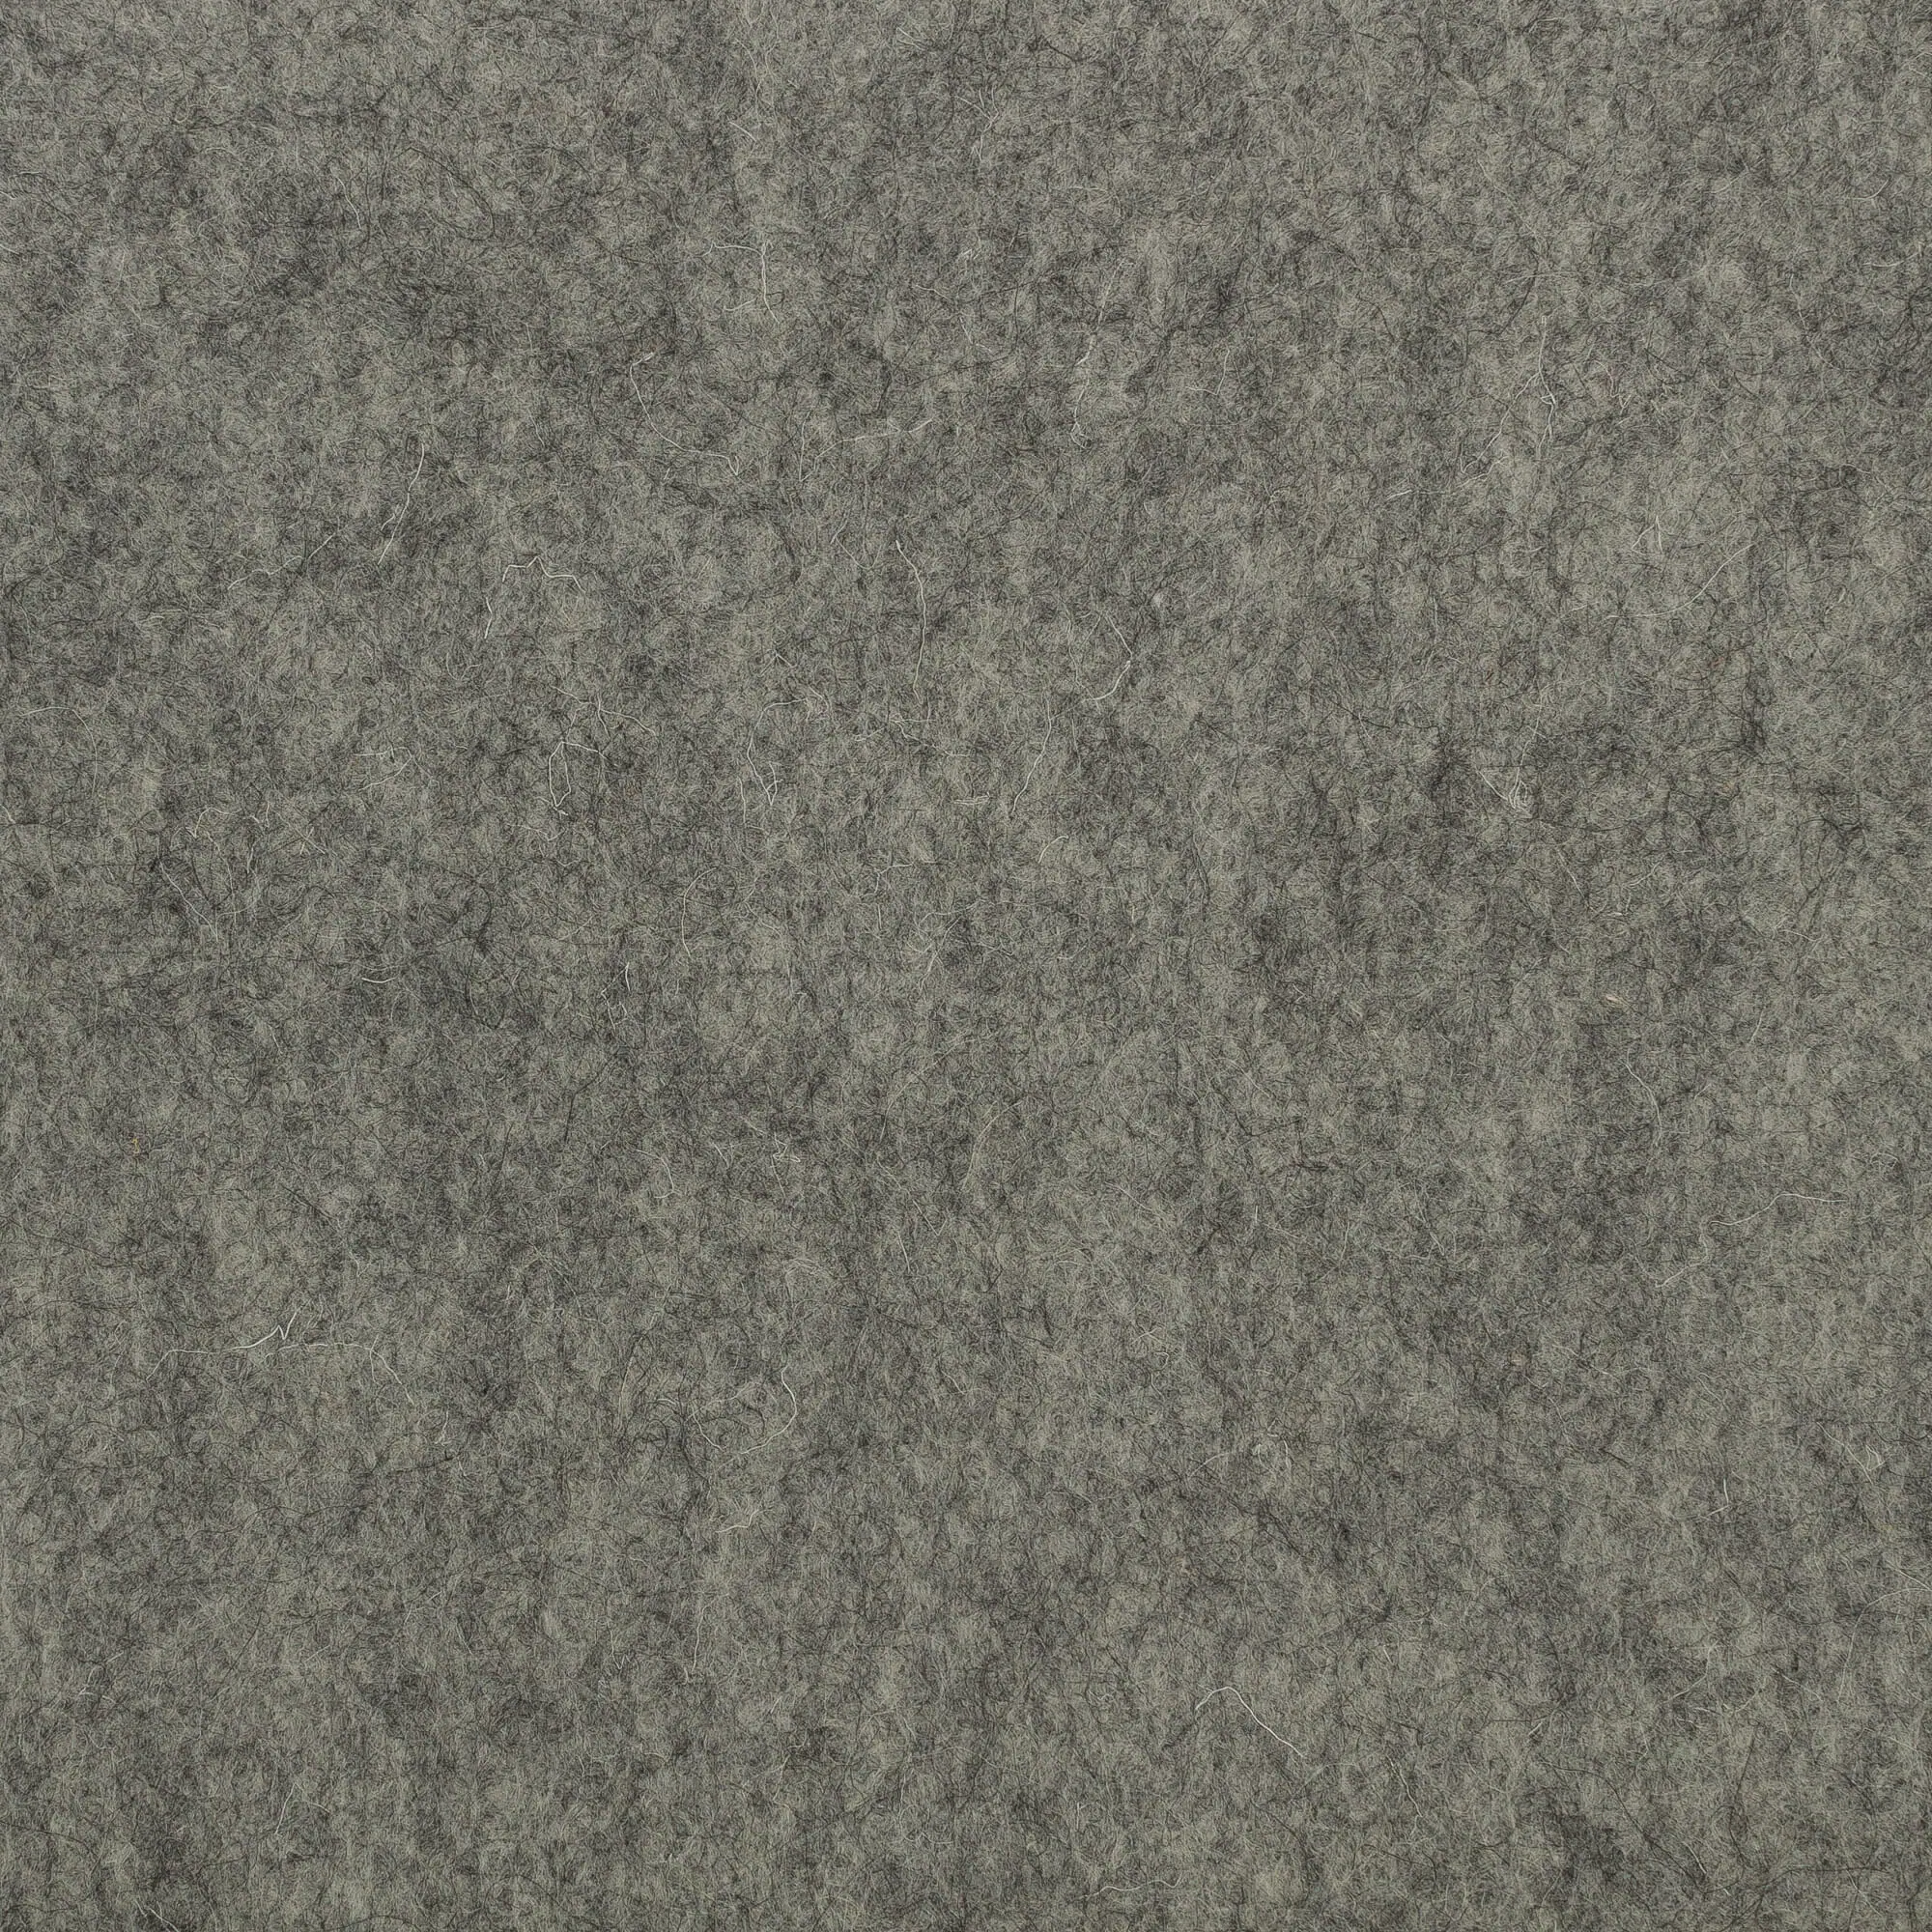 High Quality 100% Wool Sheets - 1.2 Heathered Light Grey